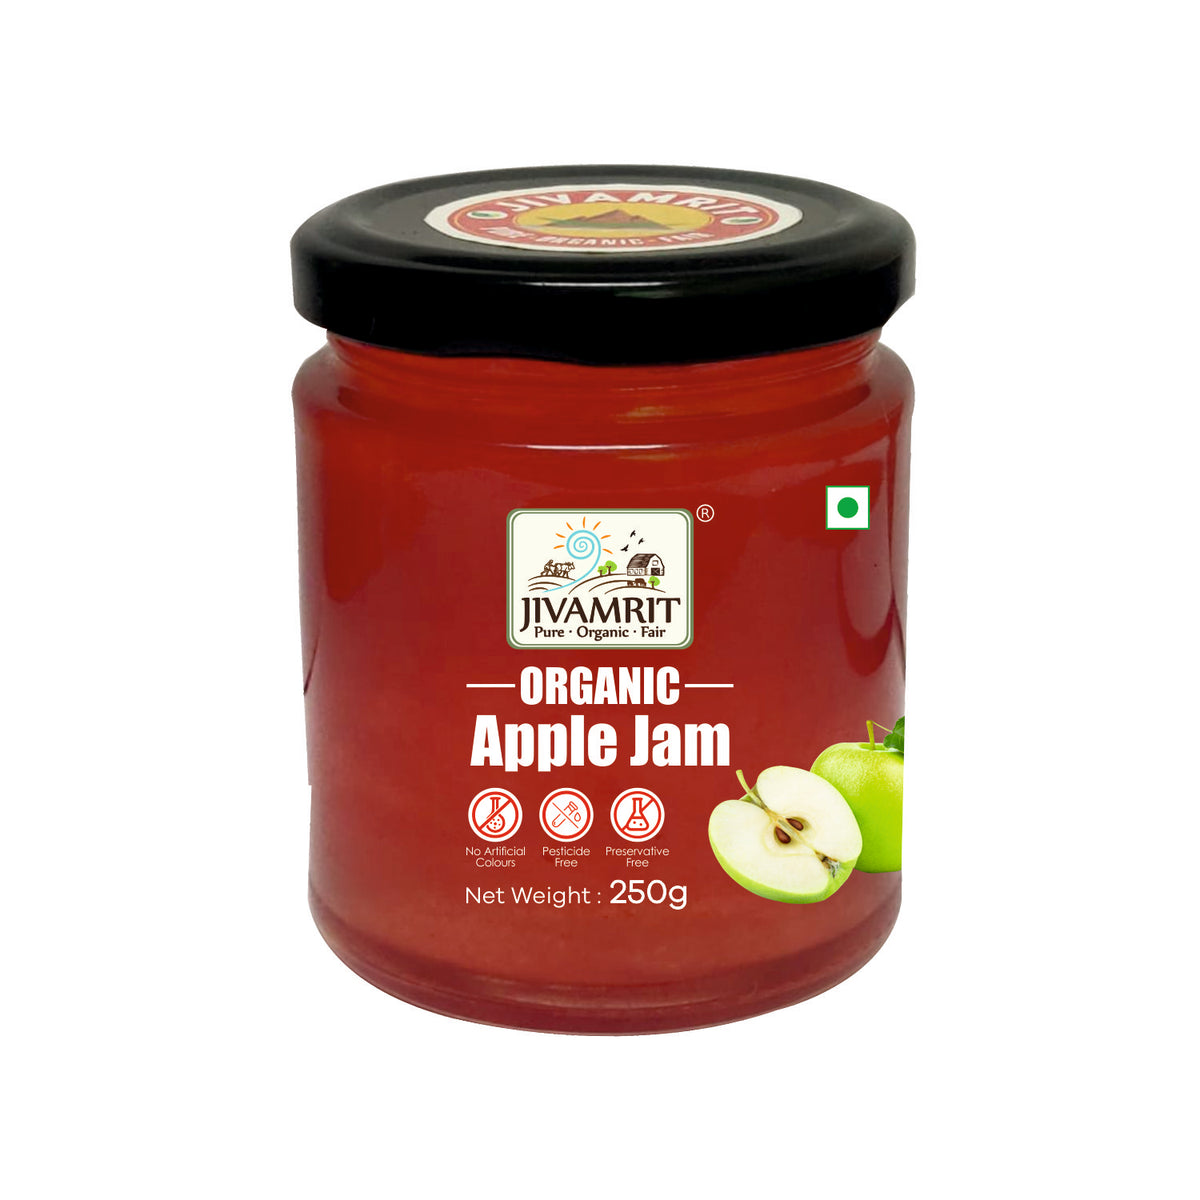 Orgnaic Apple Jam 250g - Organic Healthy Jam